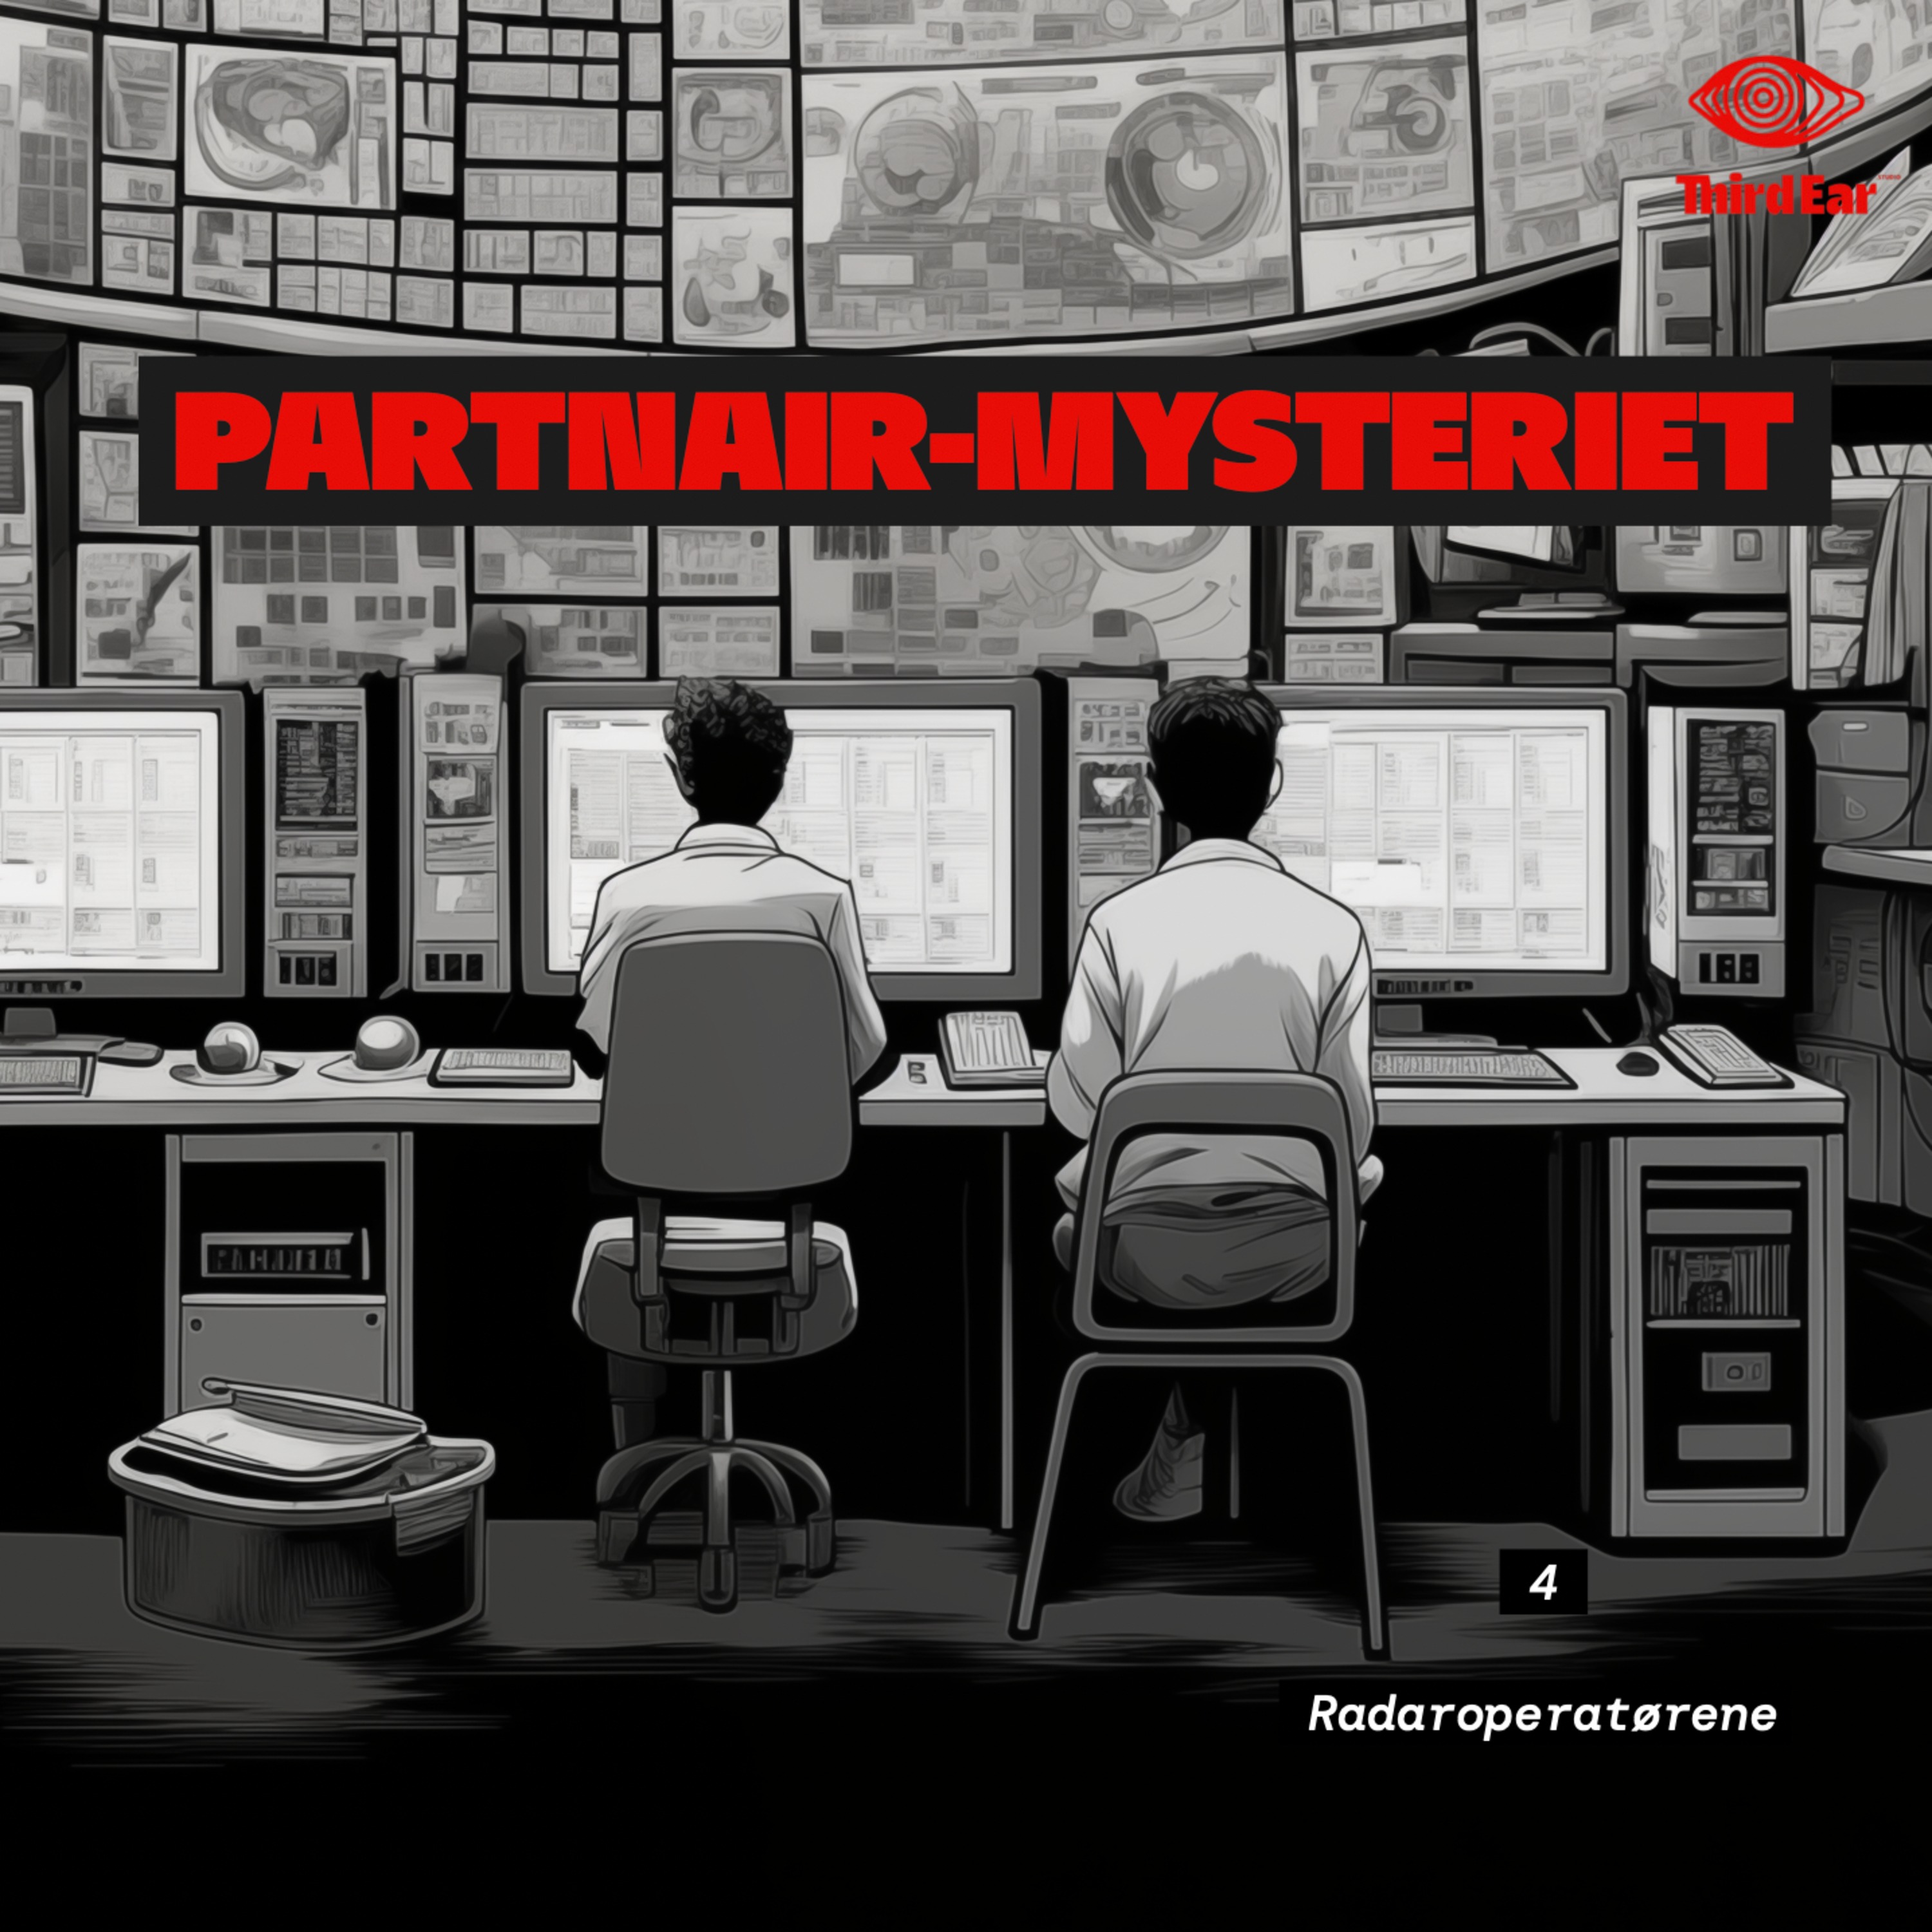 Partnair-mysteriet 4/5 – Radaroperatørene